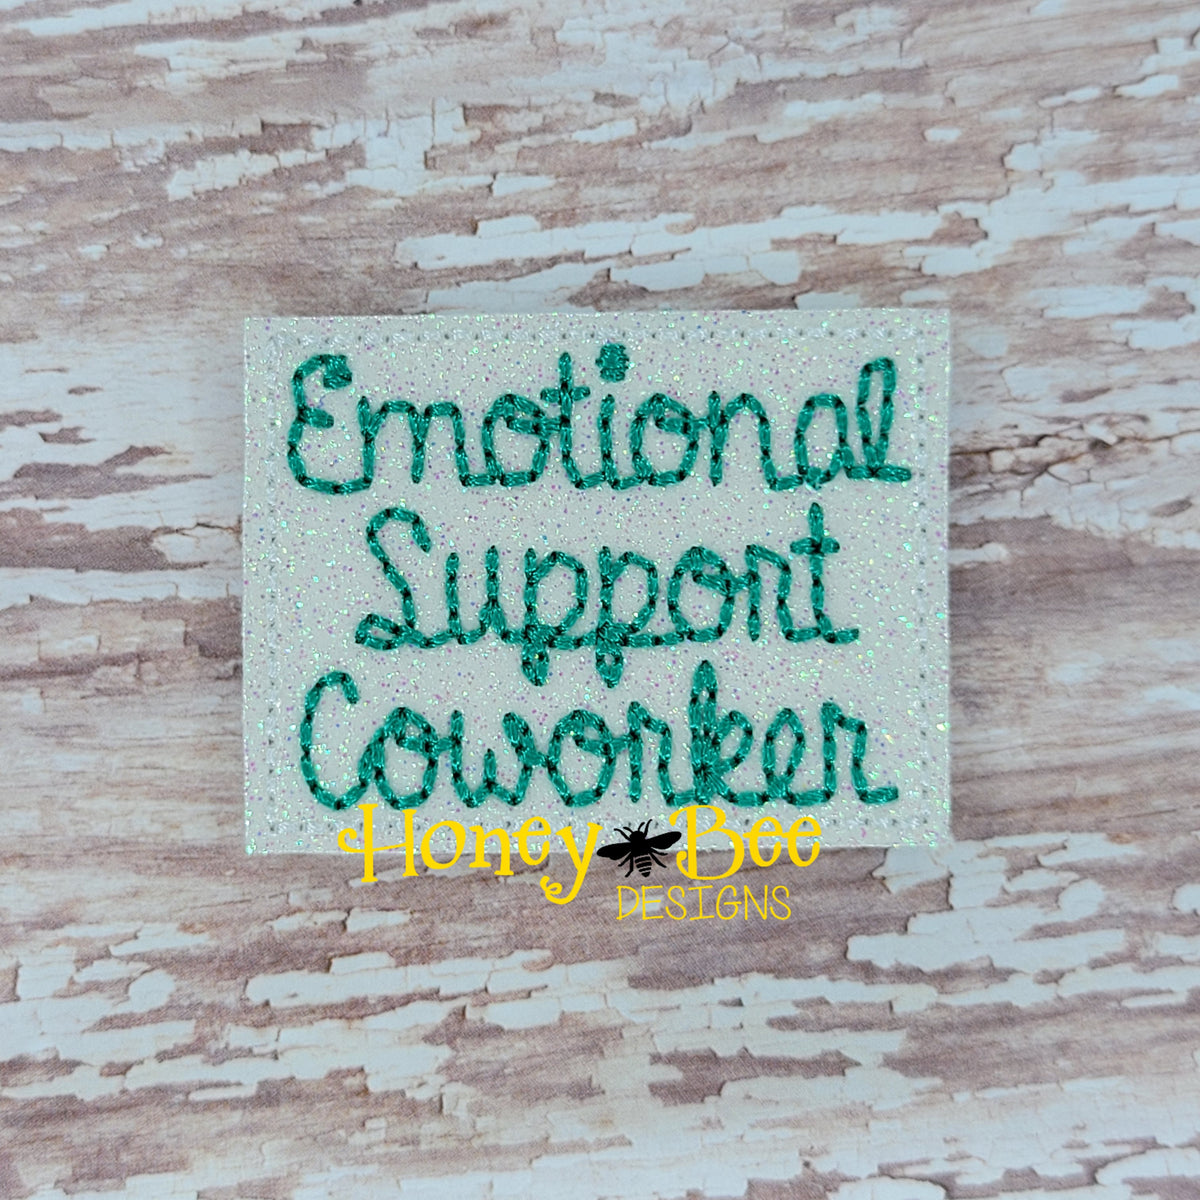 Emotional Support Coworker Feltie File